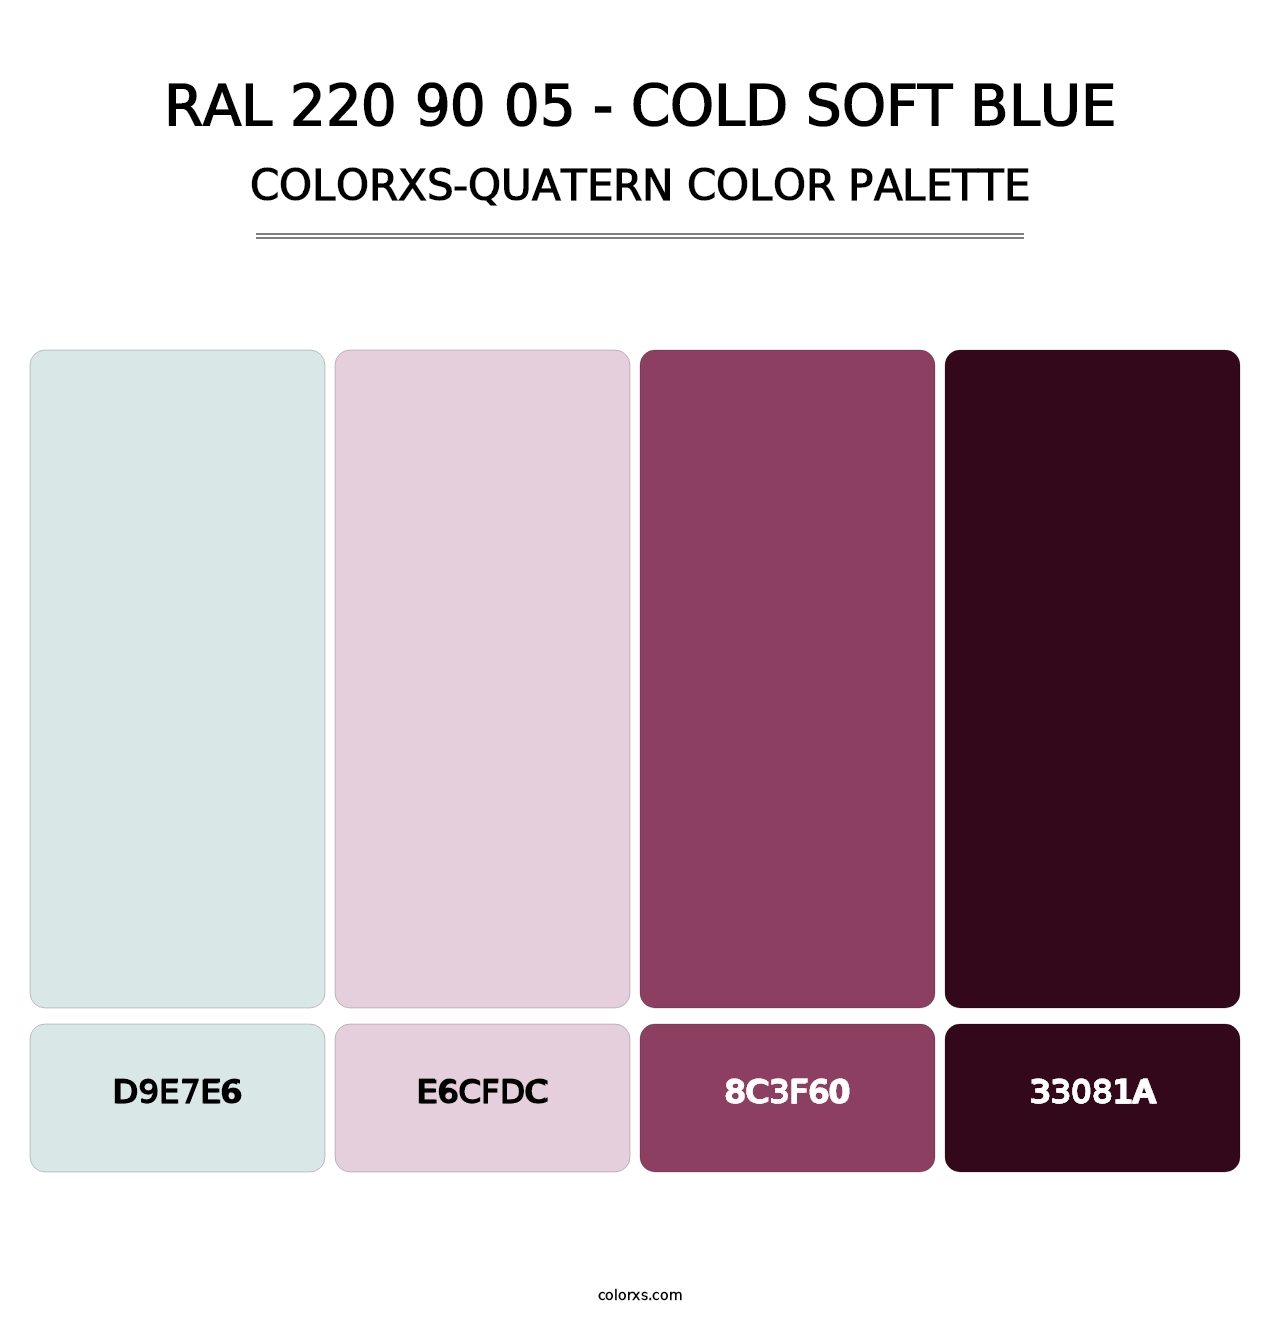 RAL 220 90 05 - Cold Soft Blue - Colorxs Quatern Palette